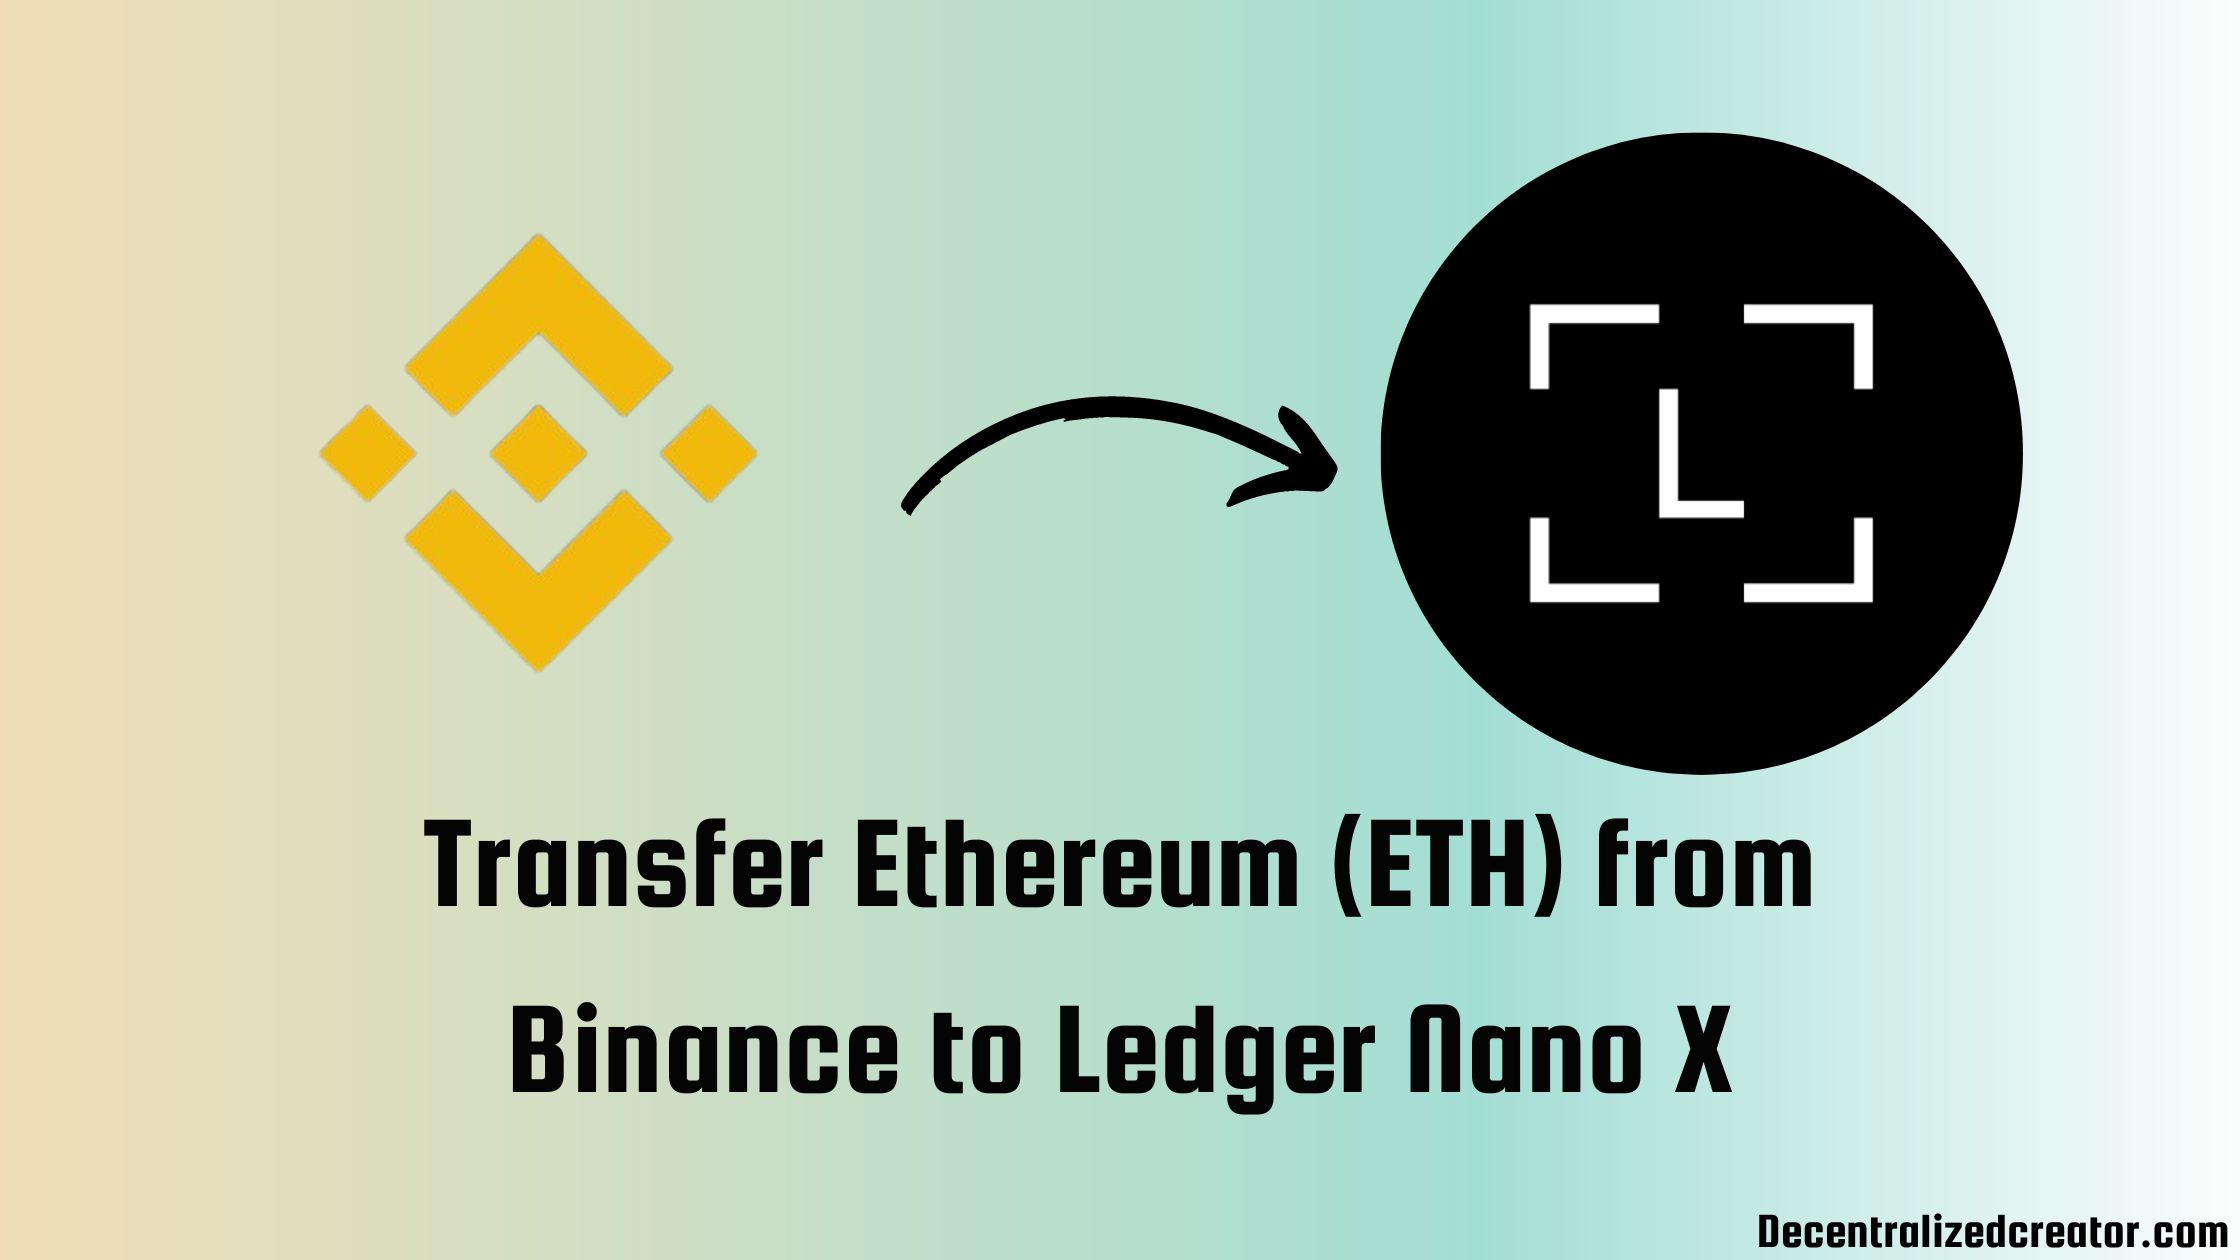 Transfer Ethereum (ETH) from Binance to Ledger Nano X